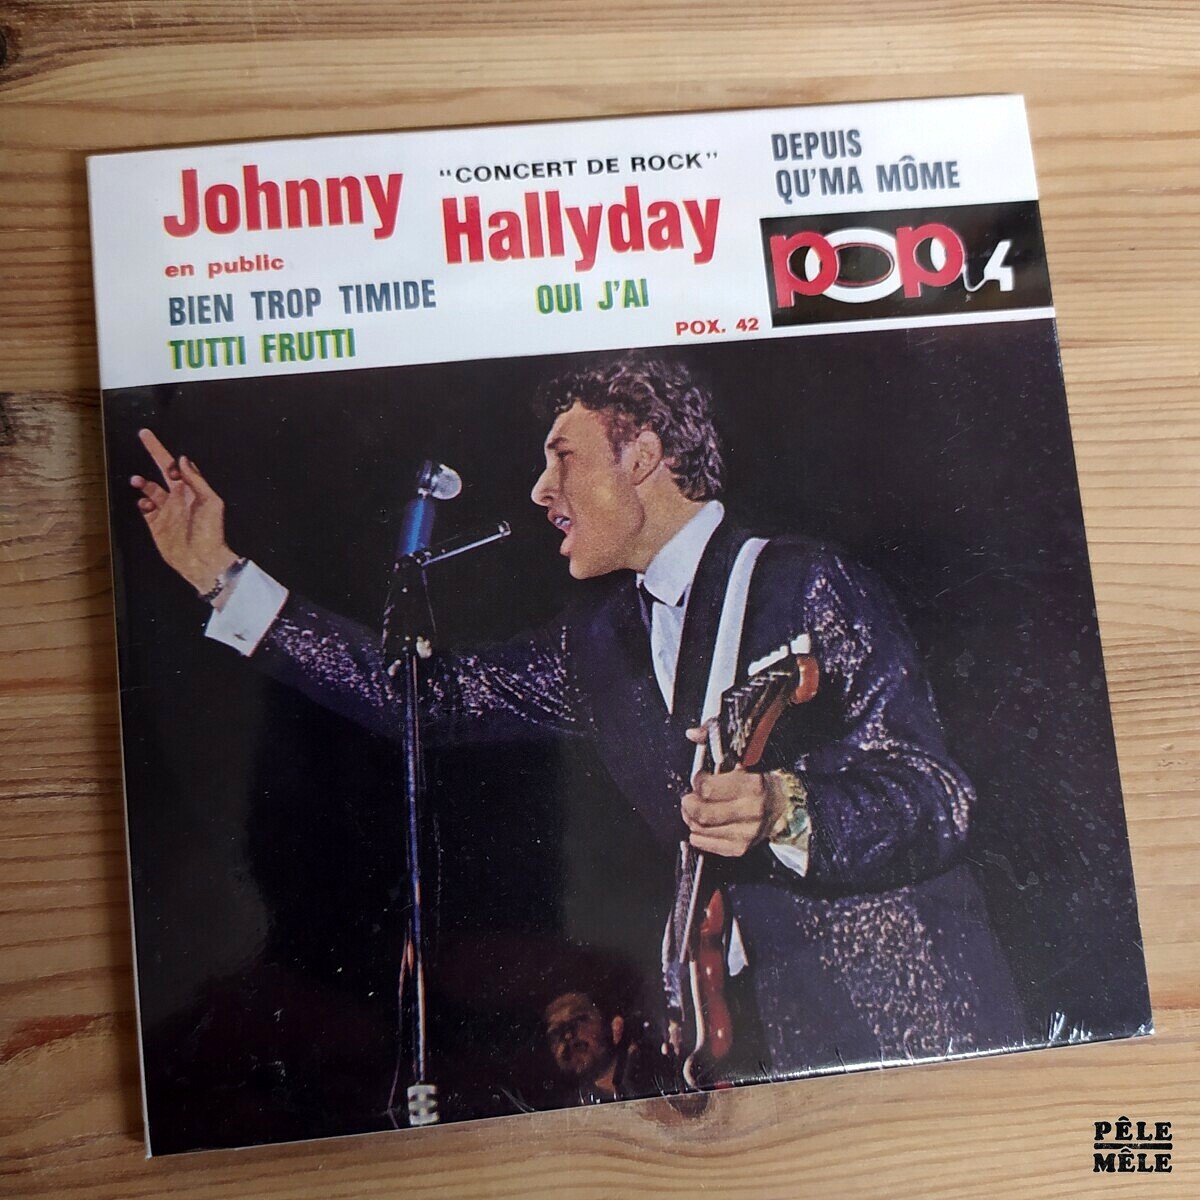 Johnny Hallyday Concert de Rock en Public (VOGUE) CD MINI REPLICA -  Pêle-Mêle Online